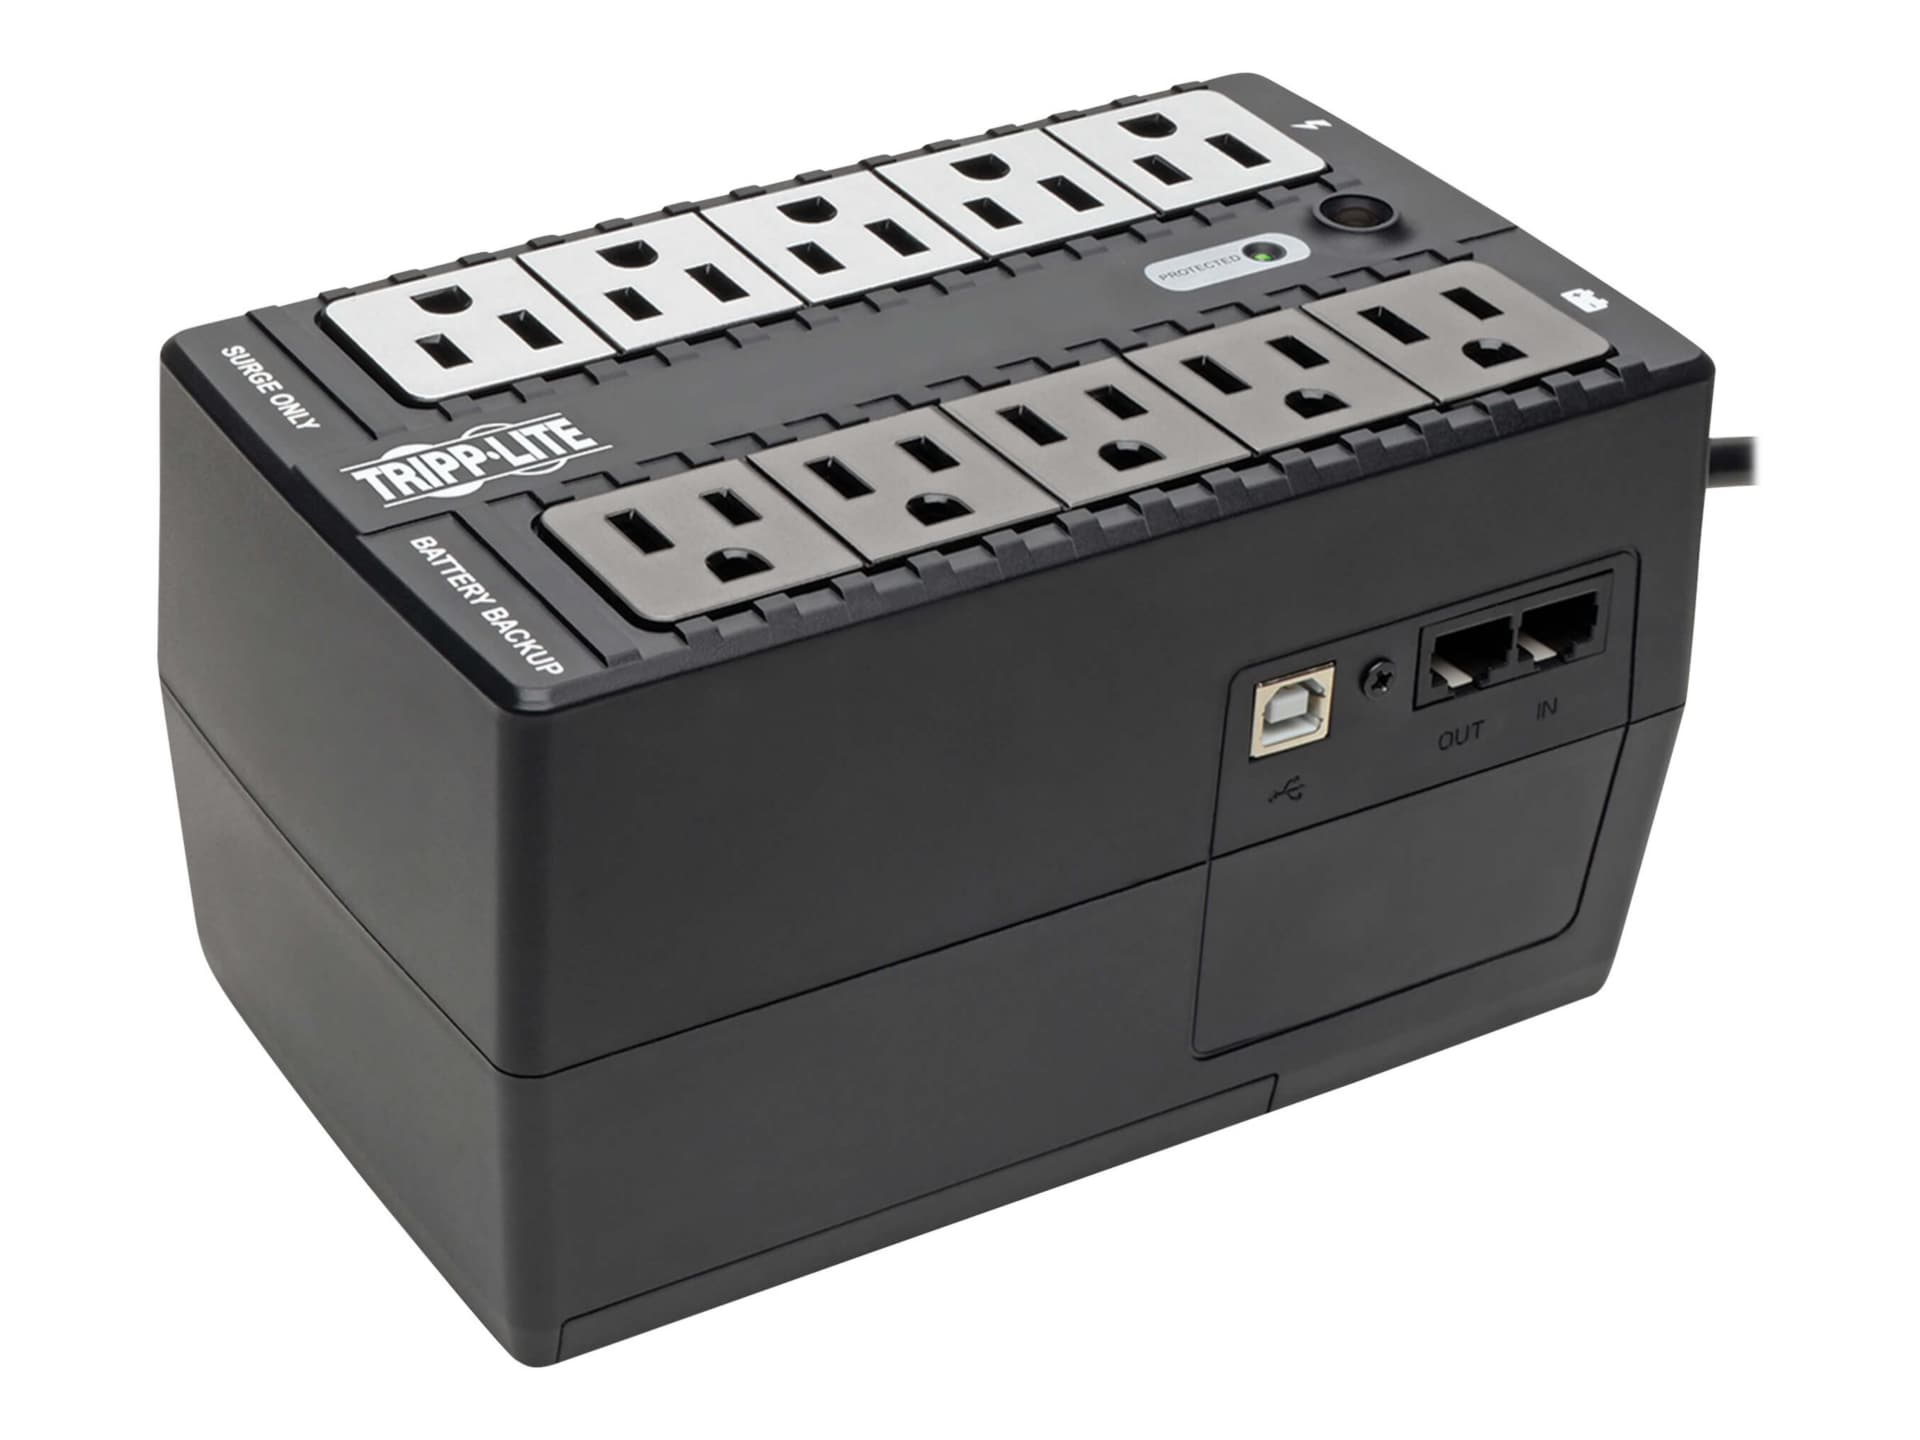 Tripp Lite UPS 600VA 325W Desktop Battery Back up Compact 120V USB RJ11